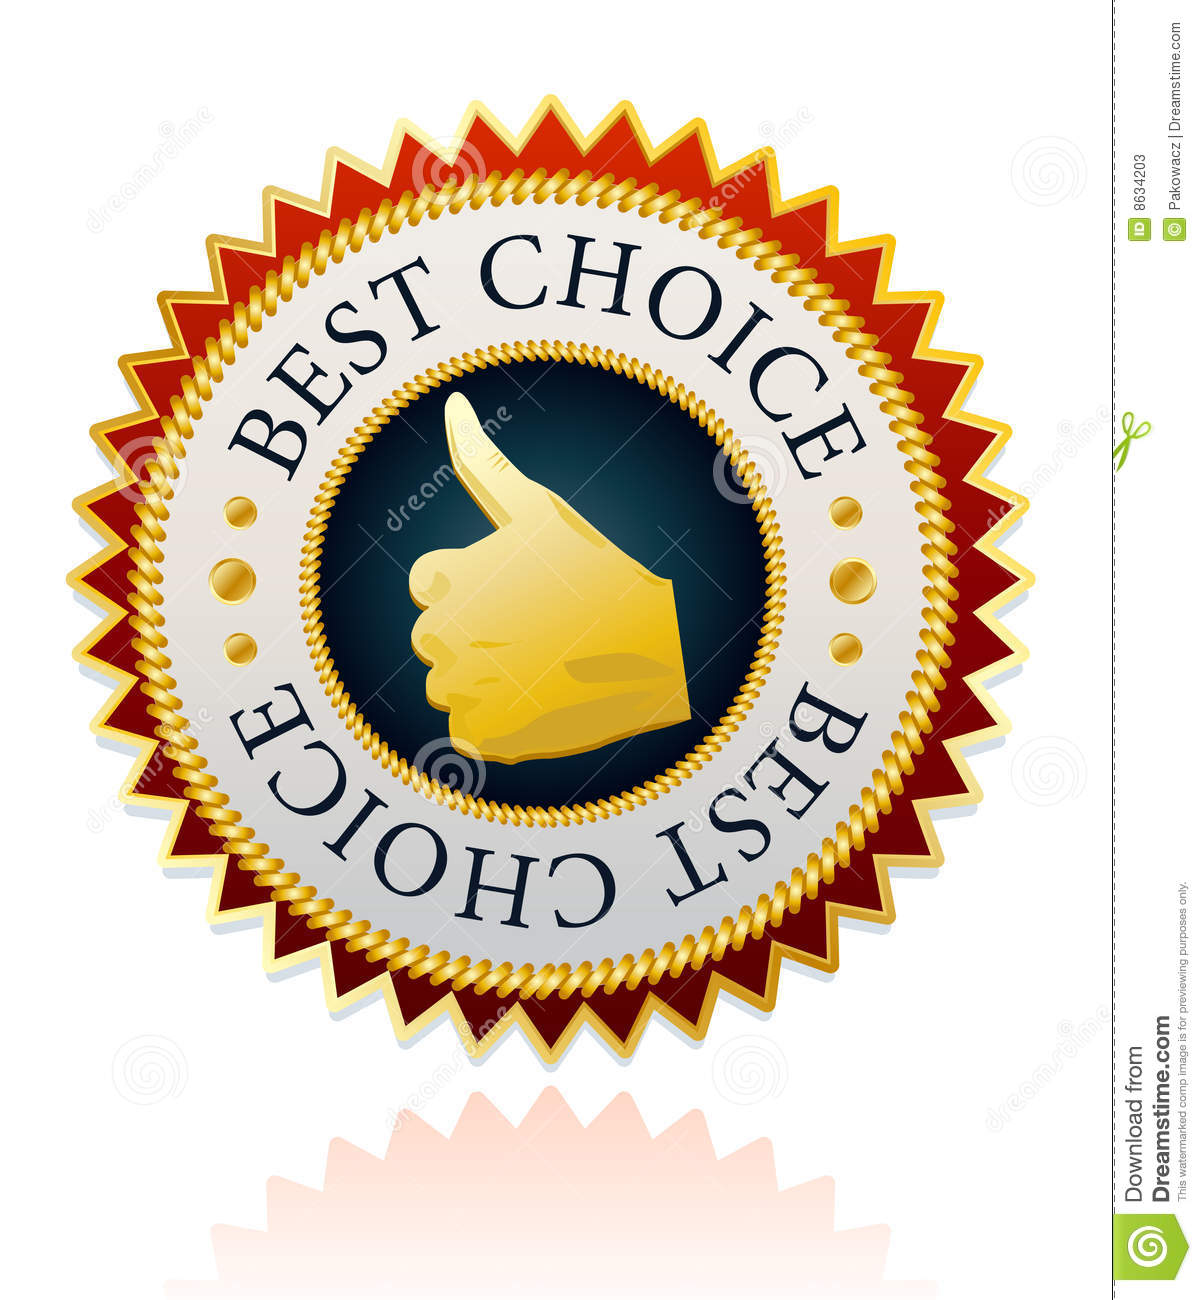 Best Choice Label Stock Photos   Image  8634203